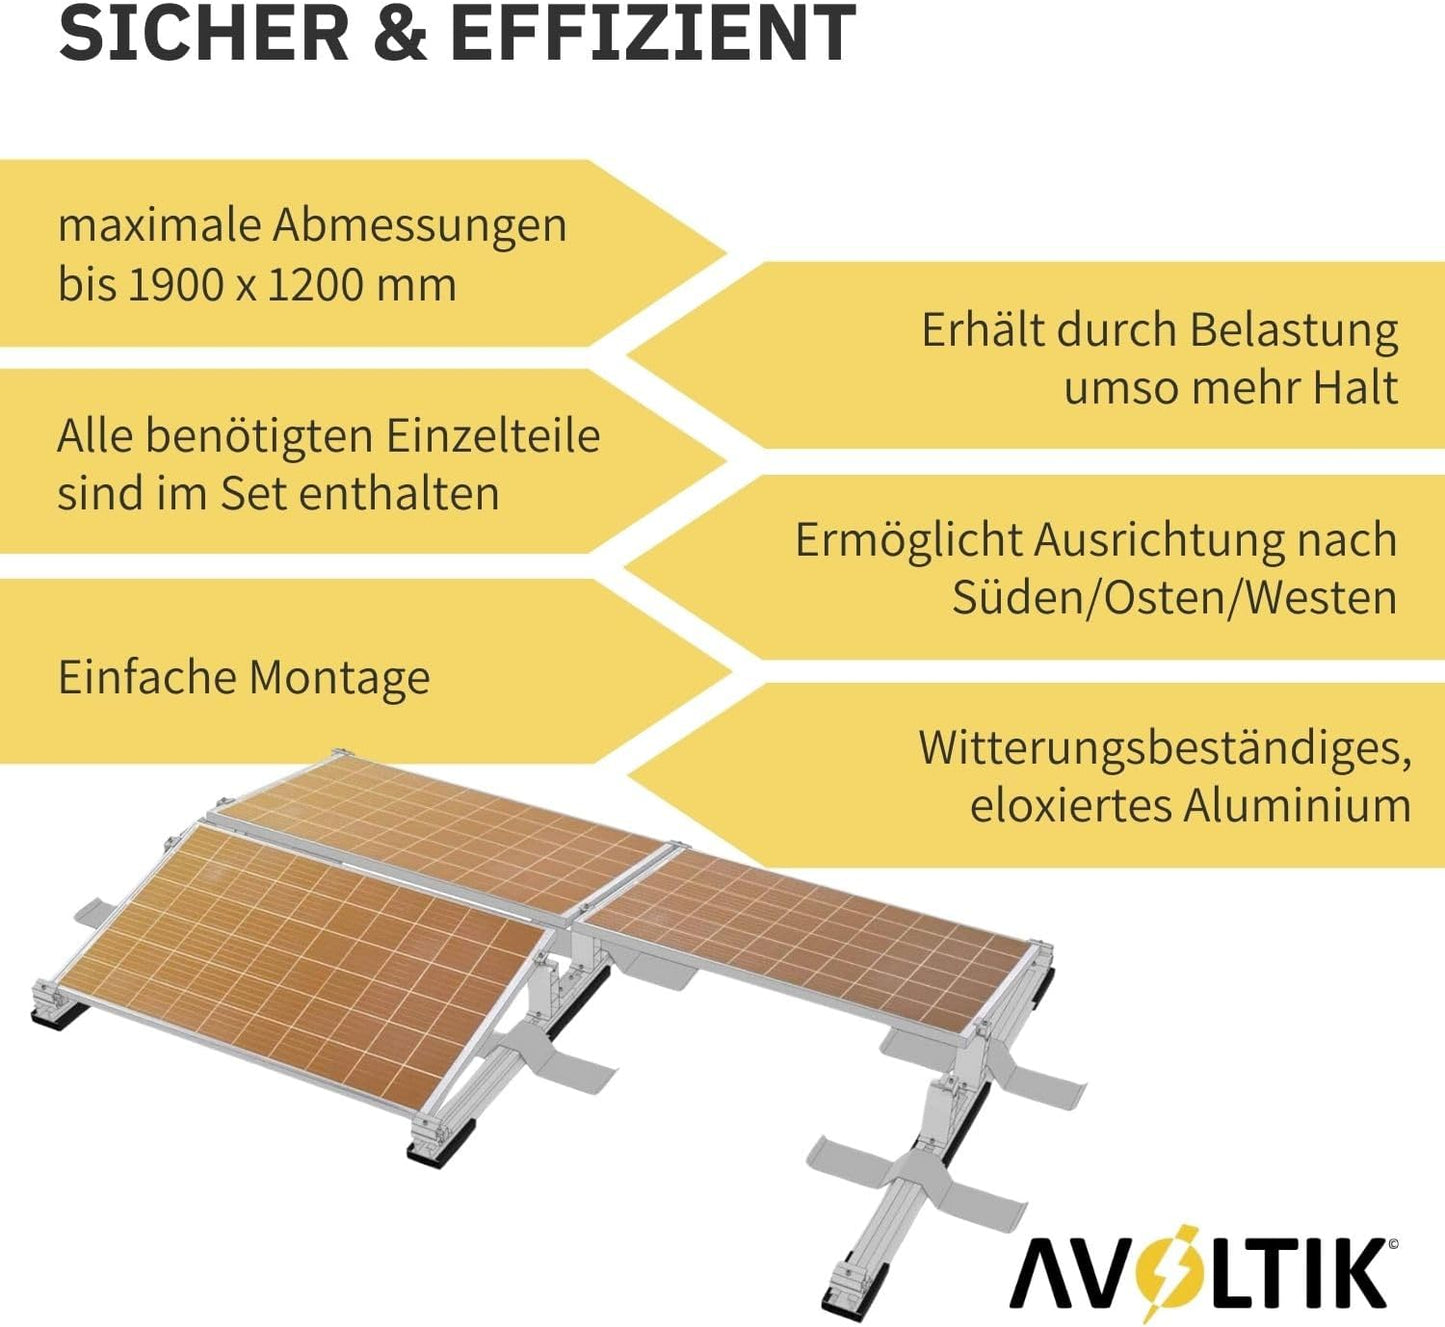 Avoltik Solarpanel Halterung für 4 Solar Module I Halterung für Solarmodule in flexibler Produktinformationen